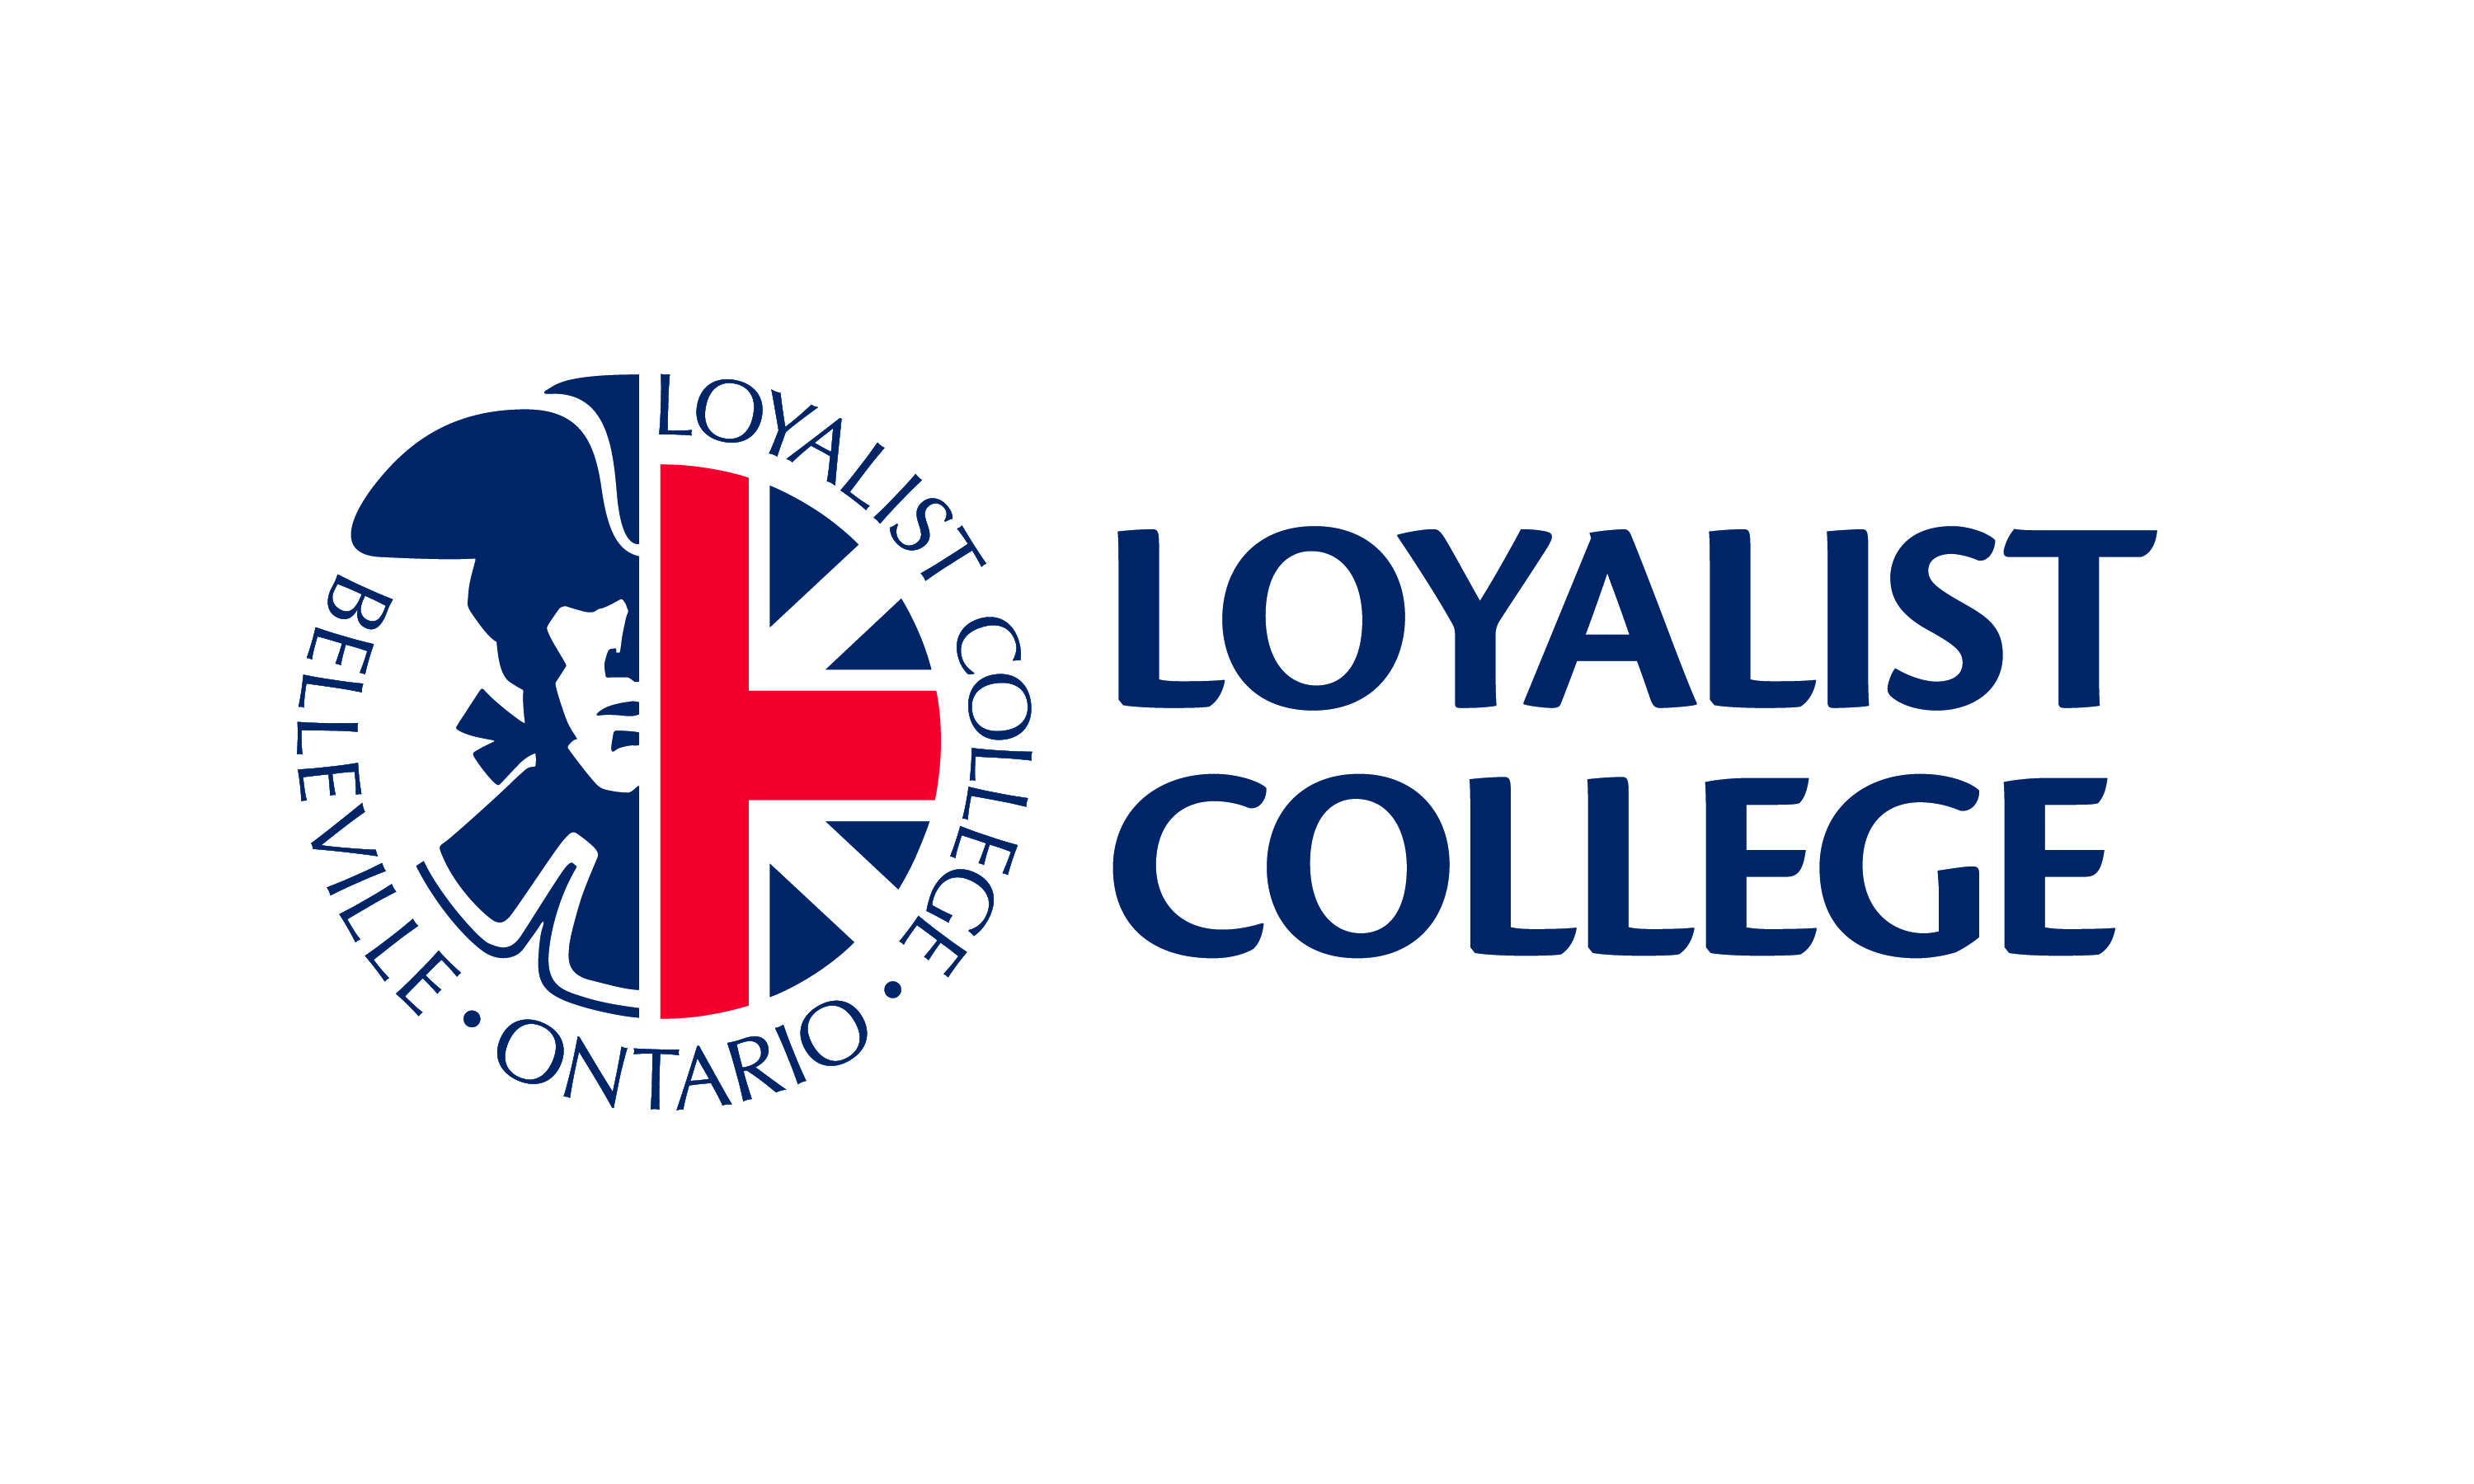   loyalist_college_logo_var2.jpg